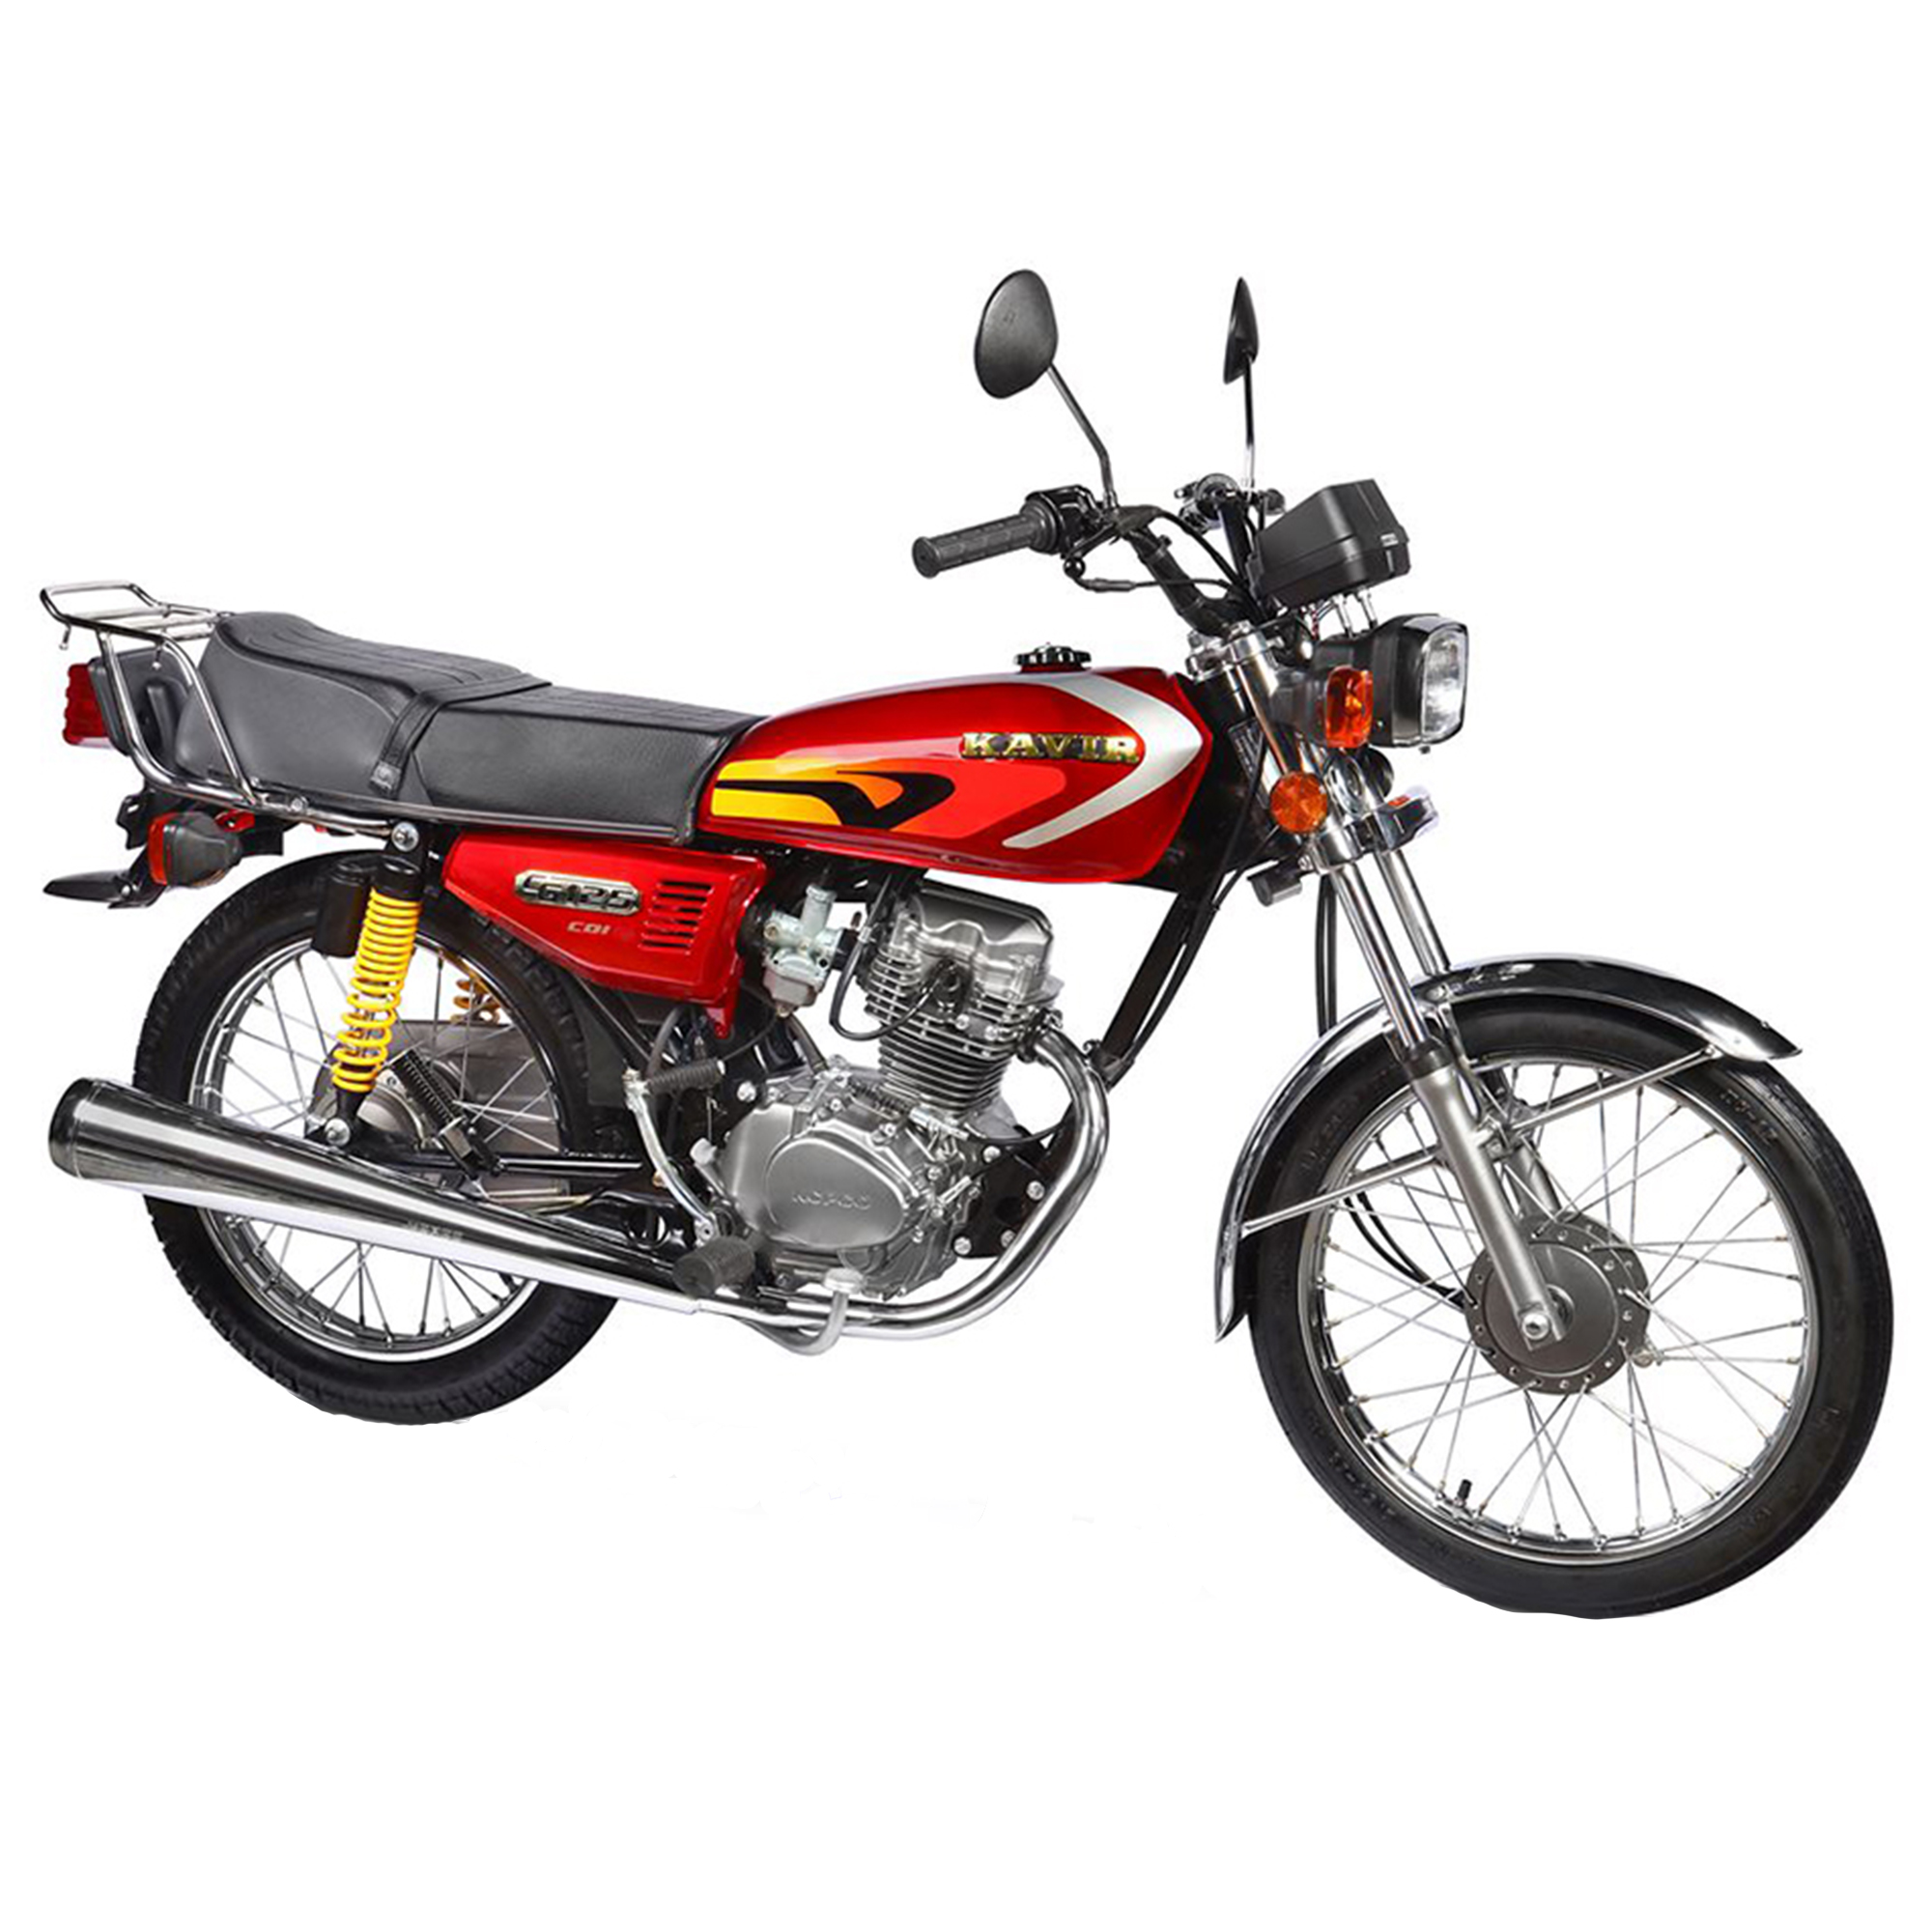 موتور سیکلت کویر مدل 125 CDI سال 1400